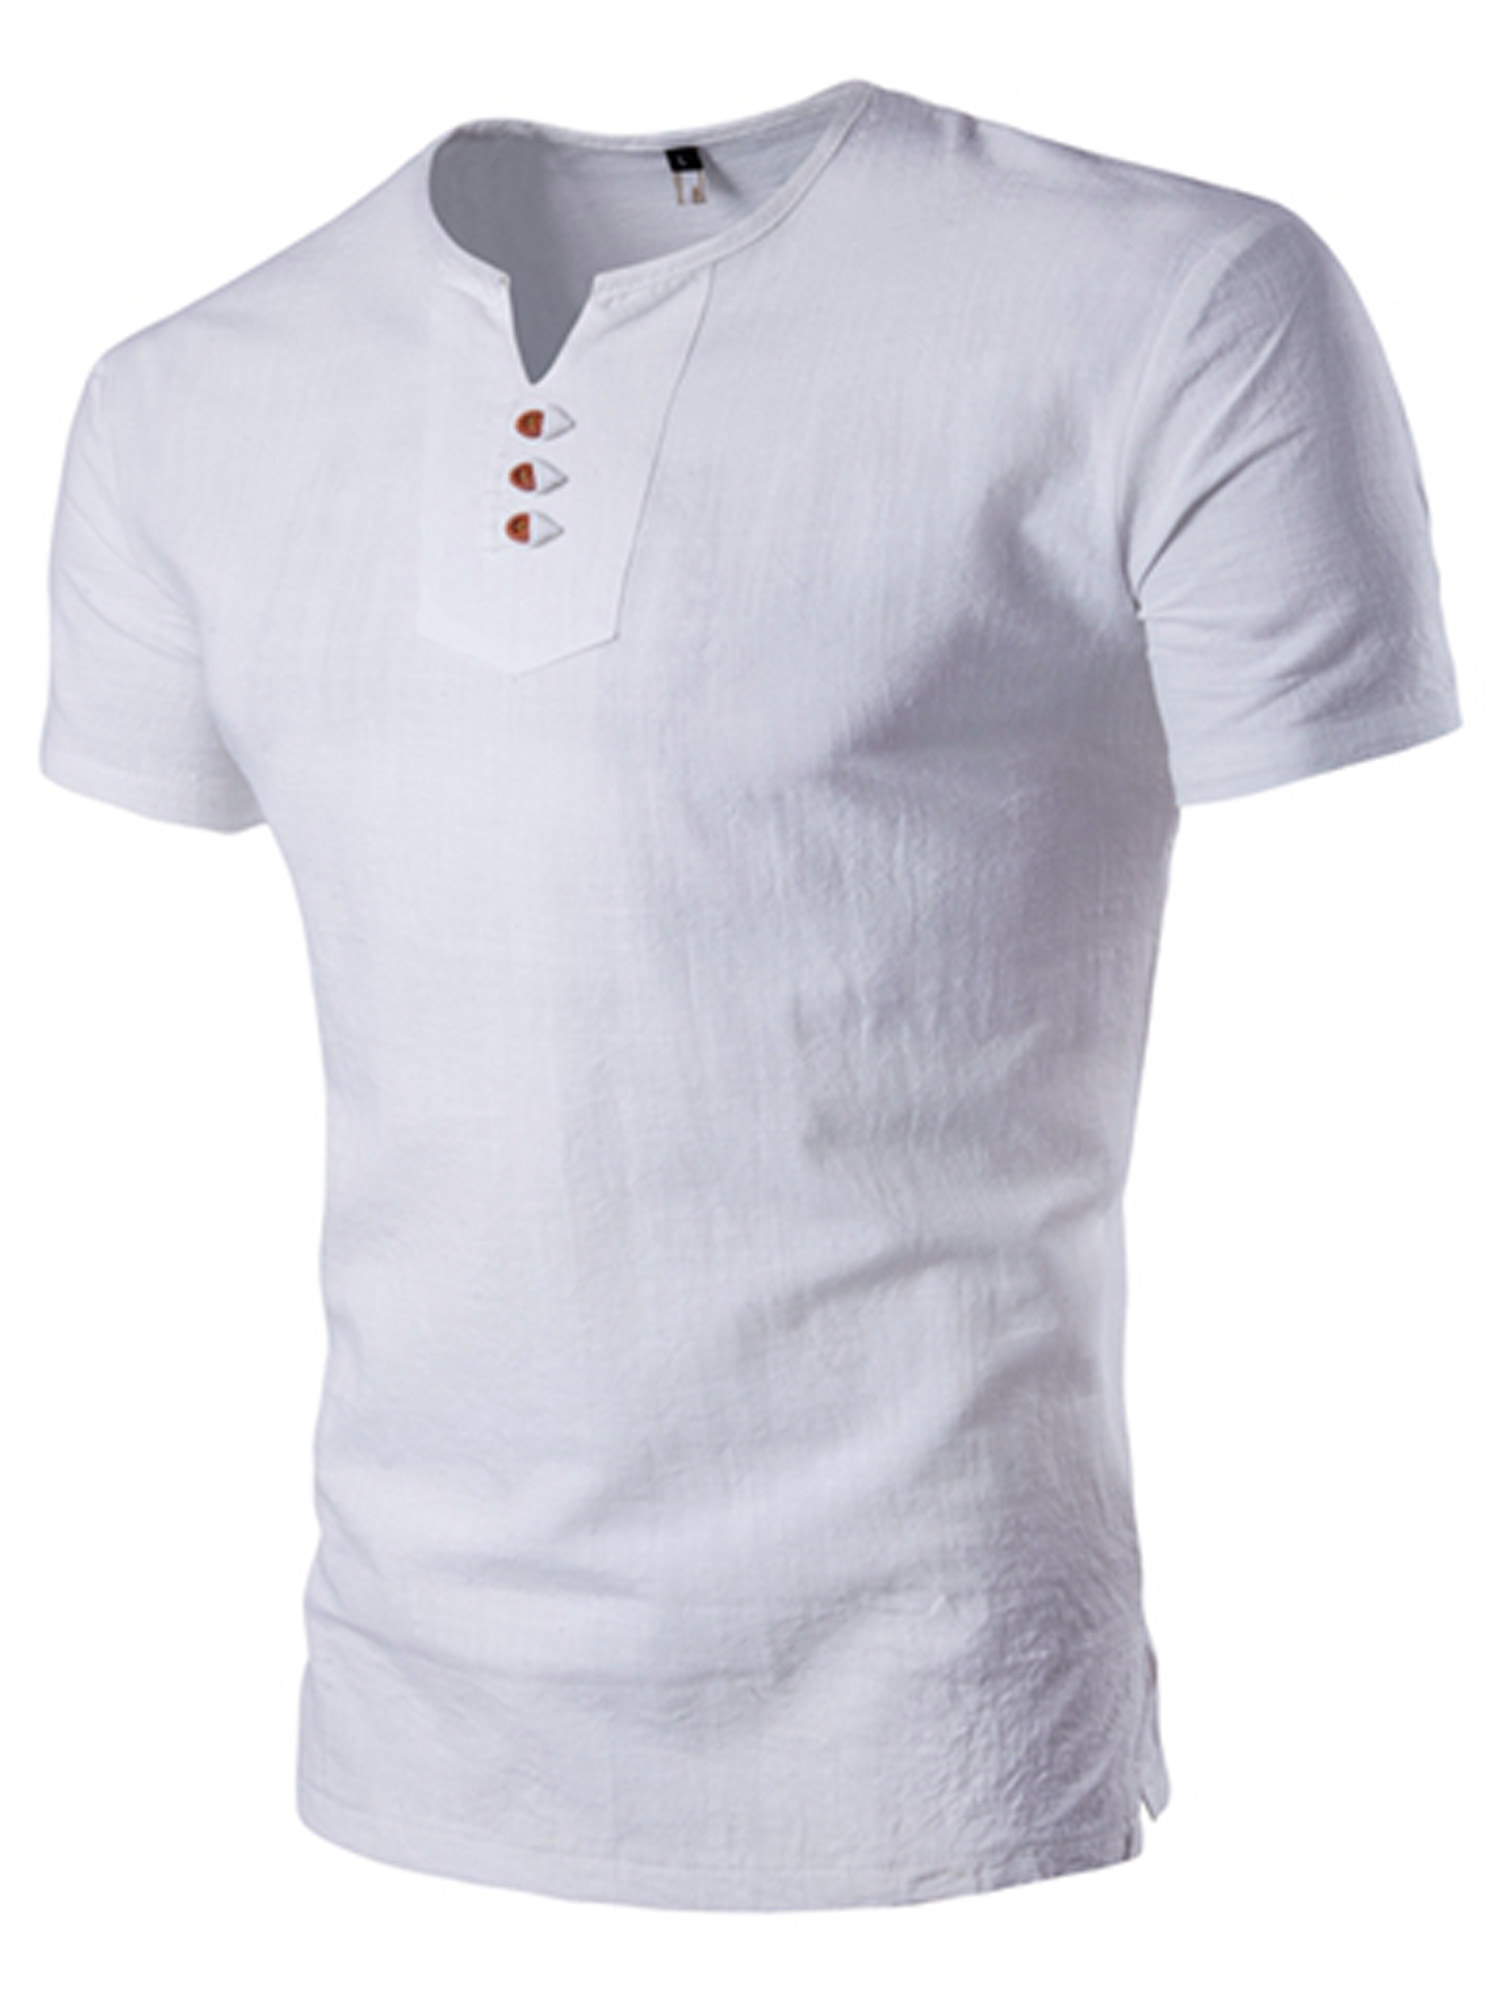 Summer Men's Cotton Linen T-Shirt Short Sleeve Basic Tee Slim Fit Casual Tops